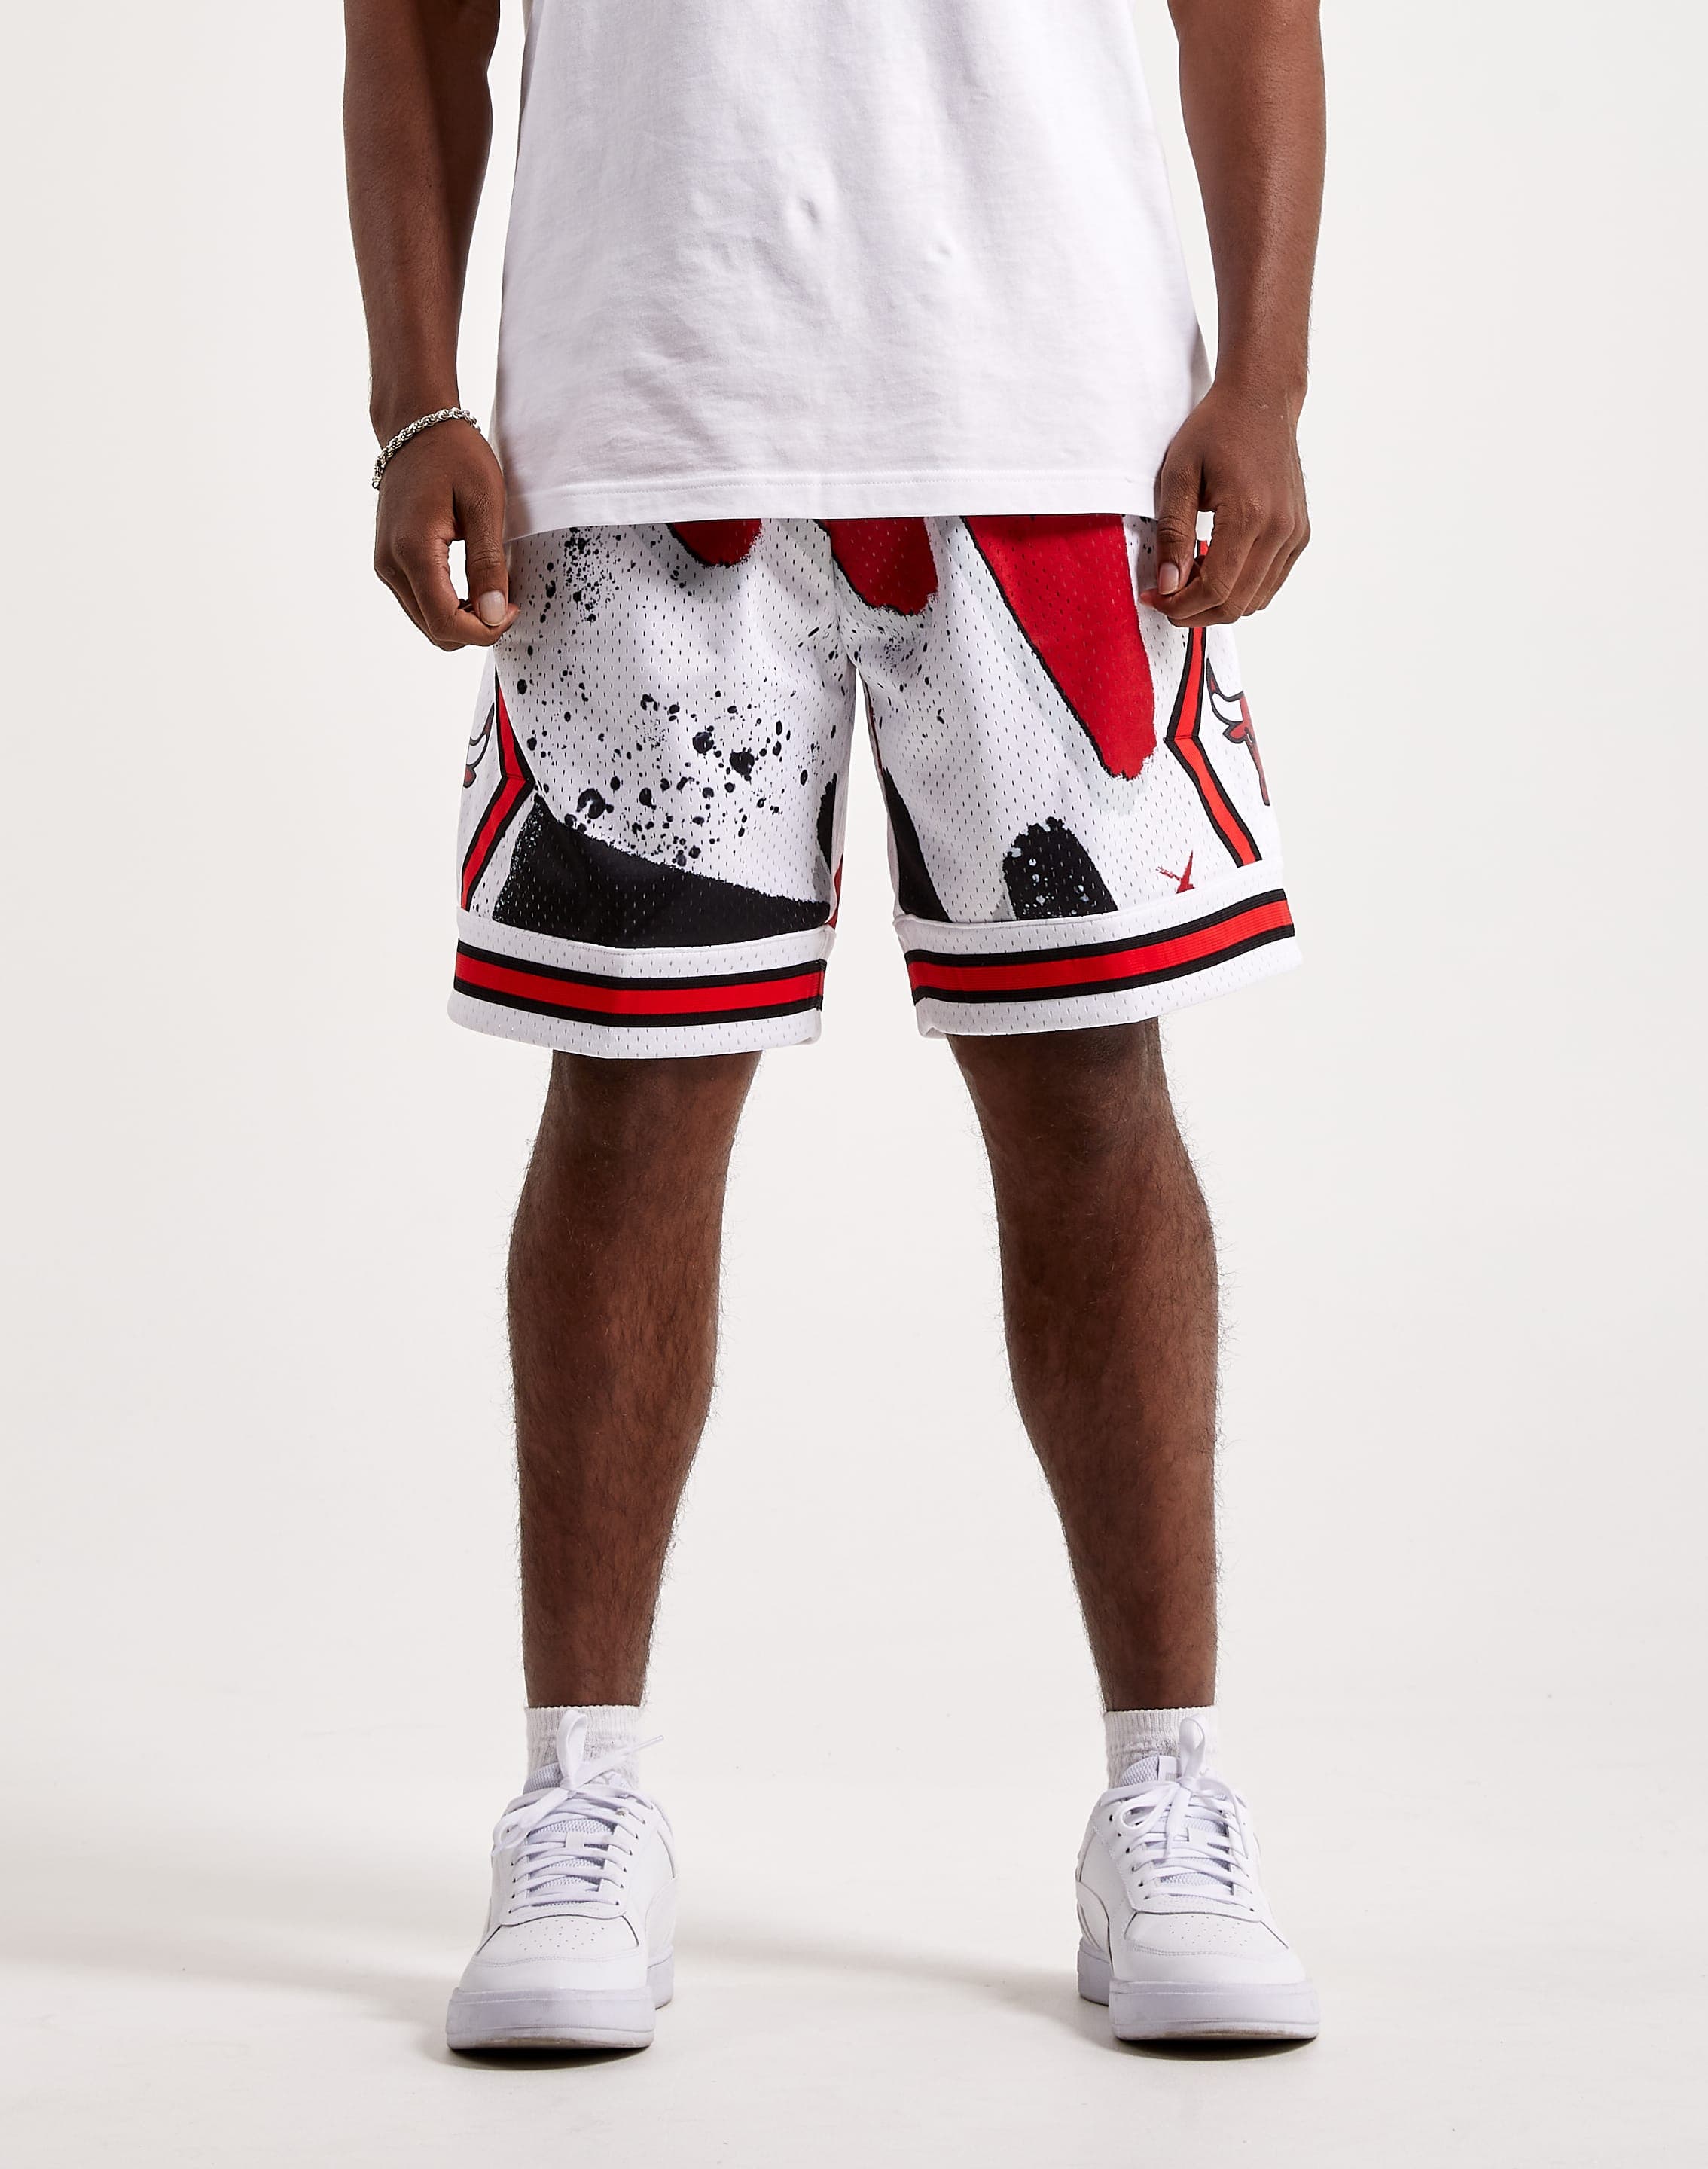 Nike Bulls Pre-Game Shorts - Men's